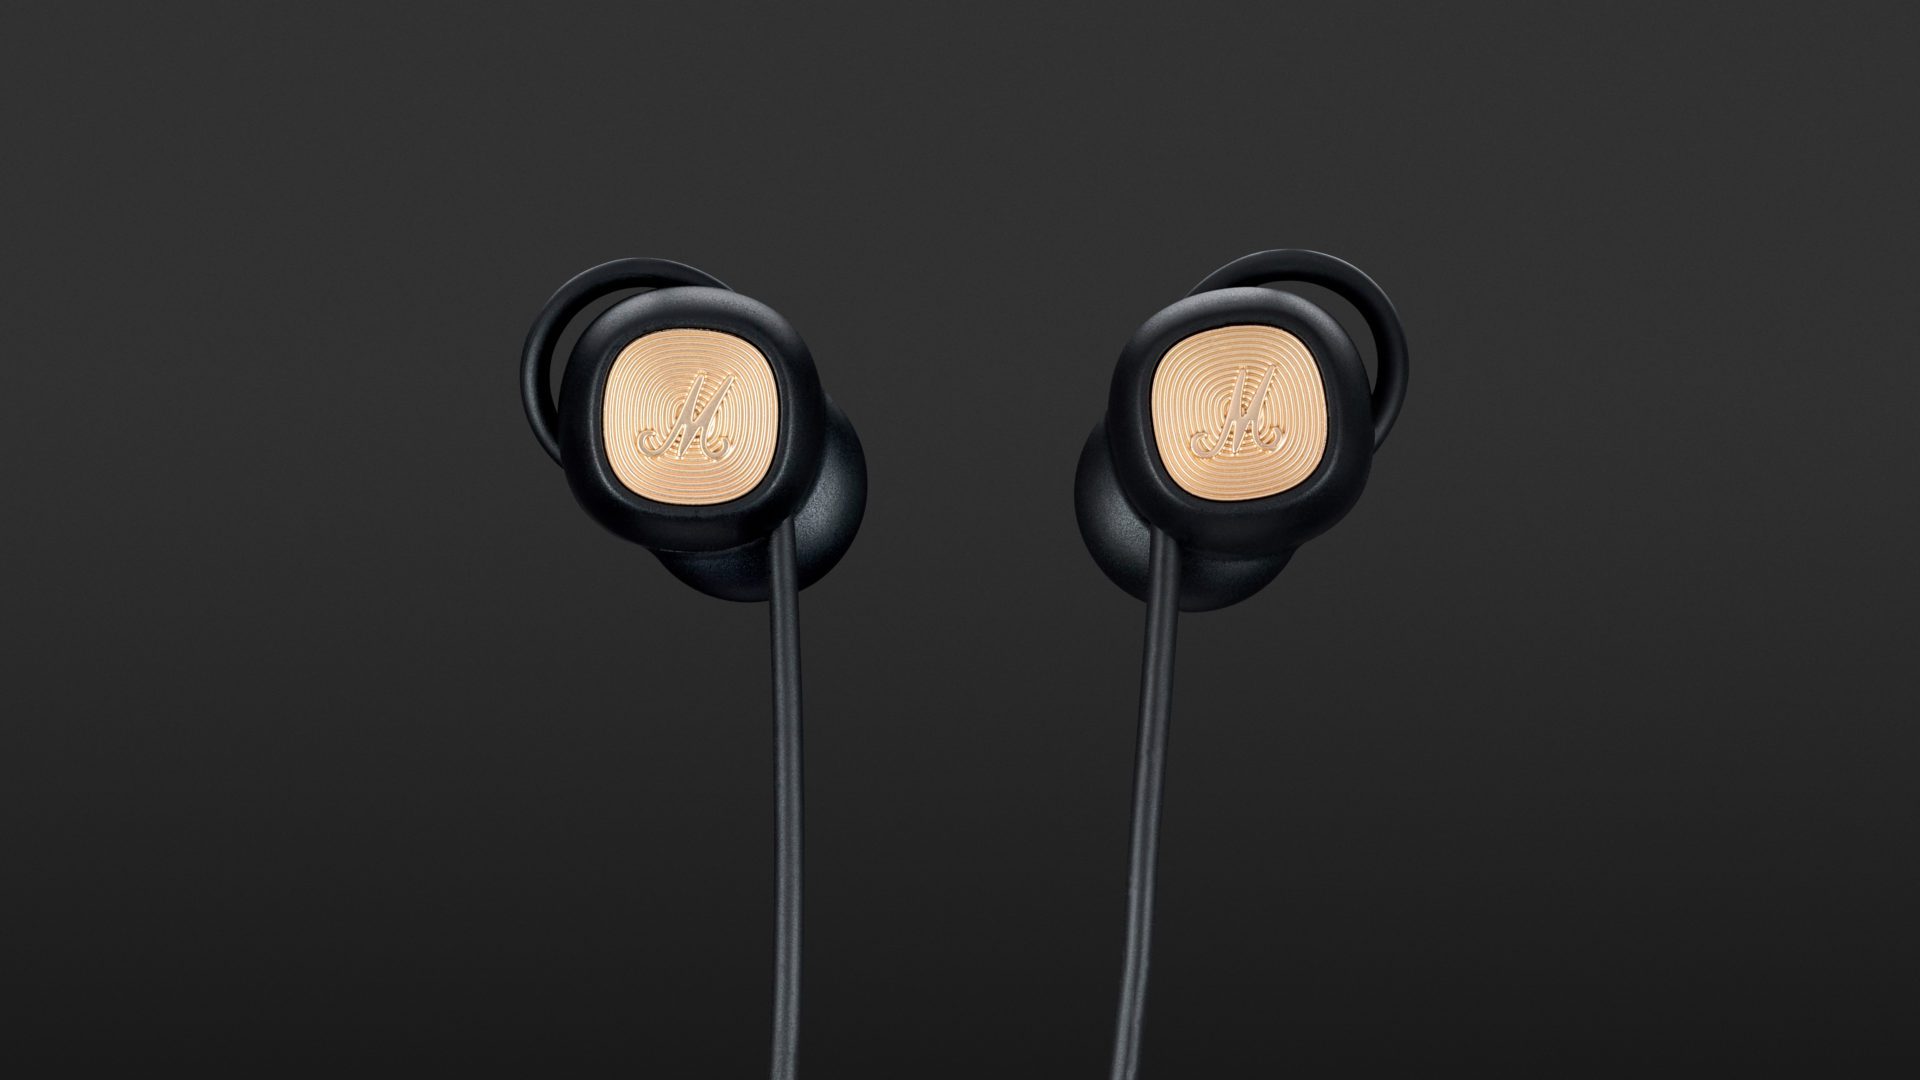 Marshall - Minor II Bluetooth Wireless In-Ear Headphones - Brown 